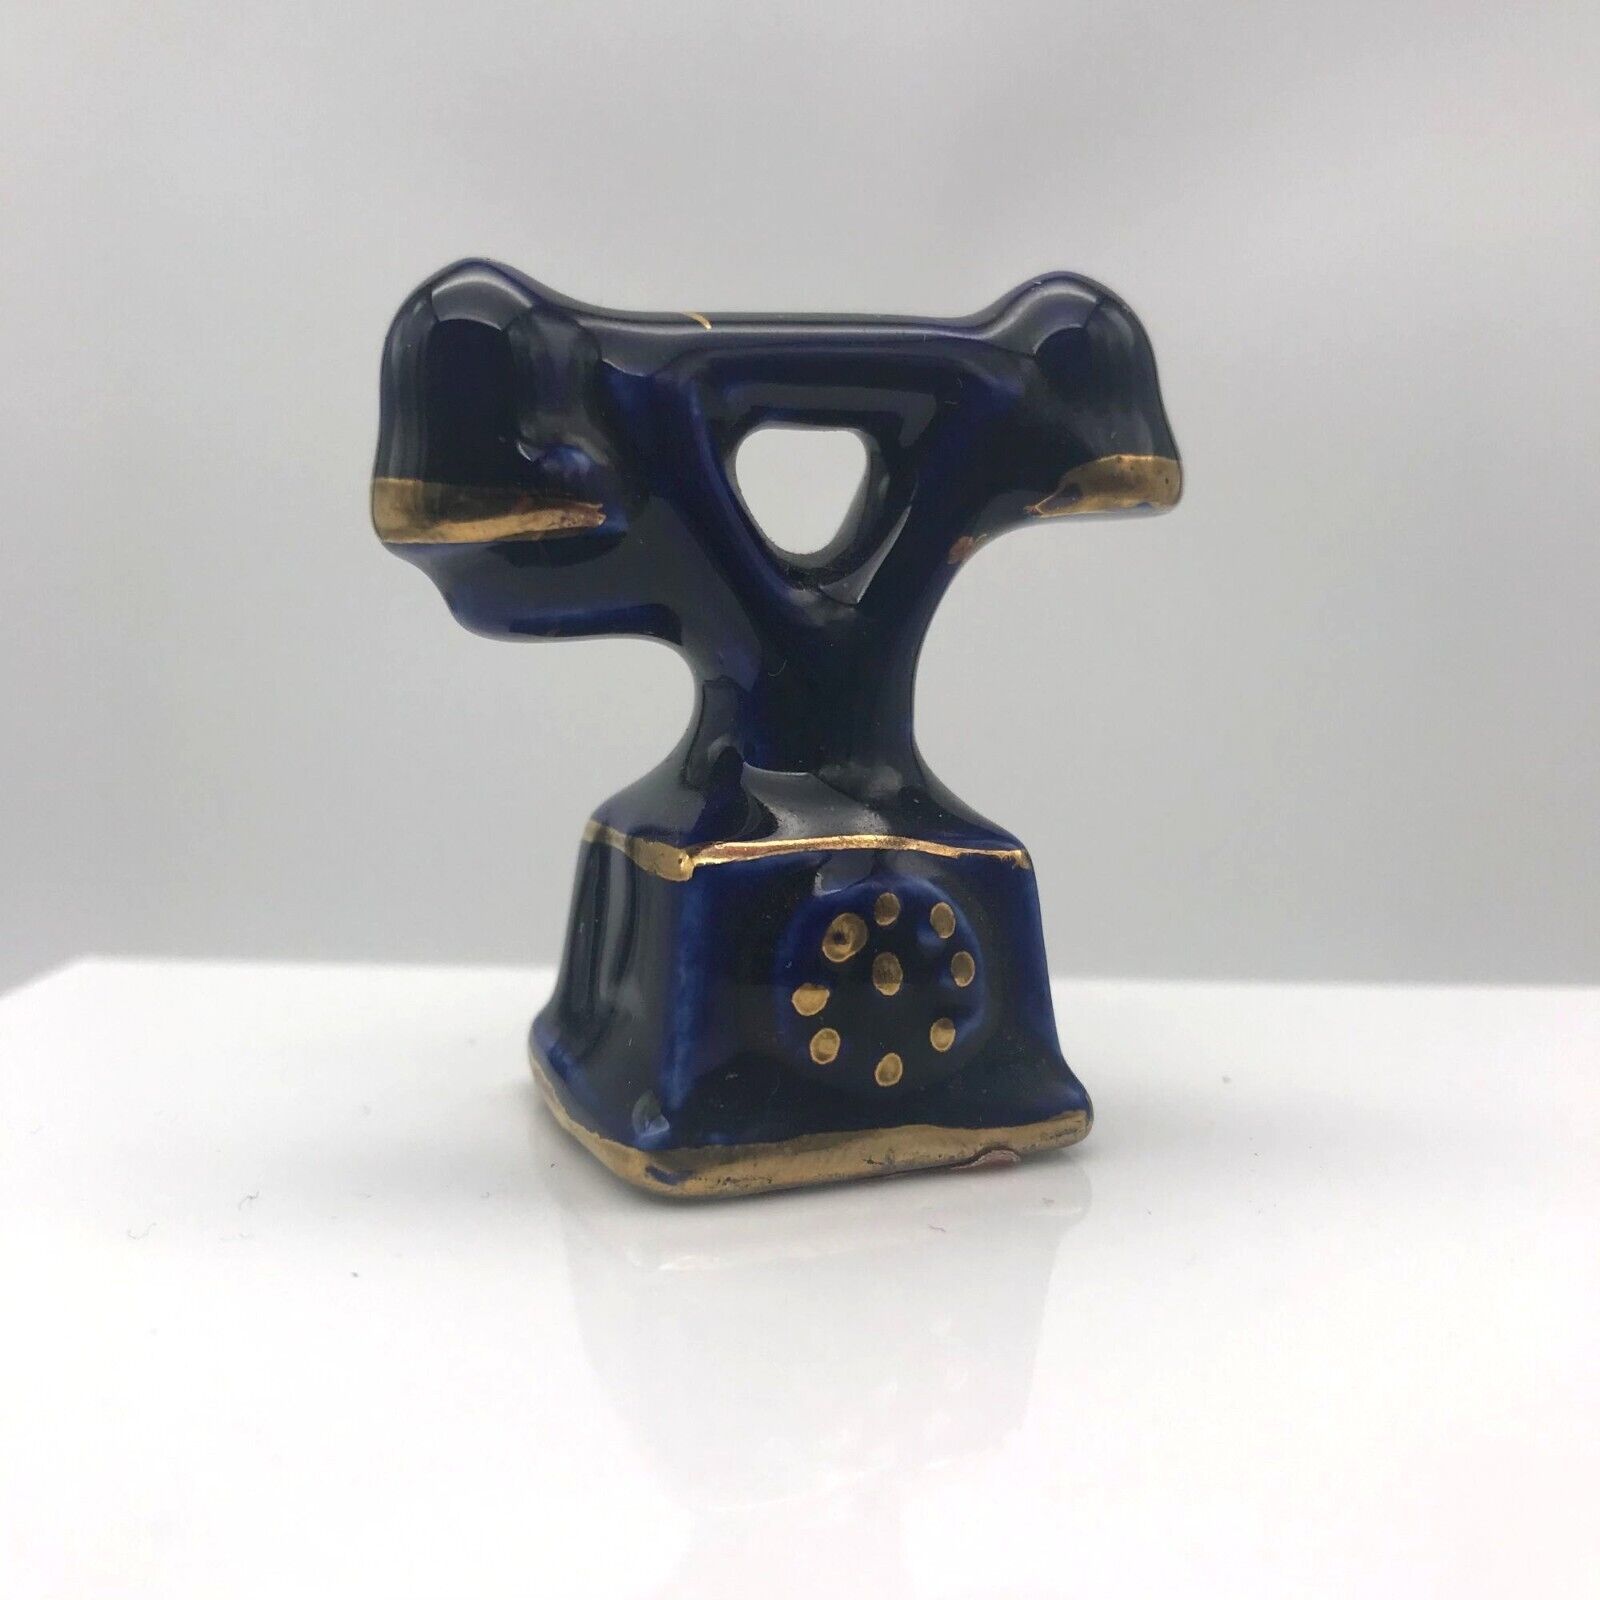 Primary image for Enesco Miniature Bone China Telephone, Vintage Cobalt Blue Cradle Phone Gilded